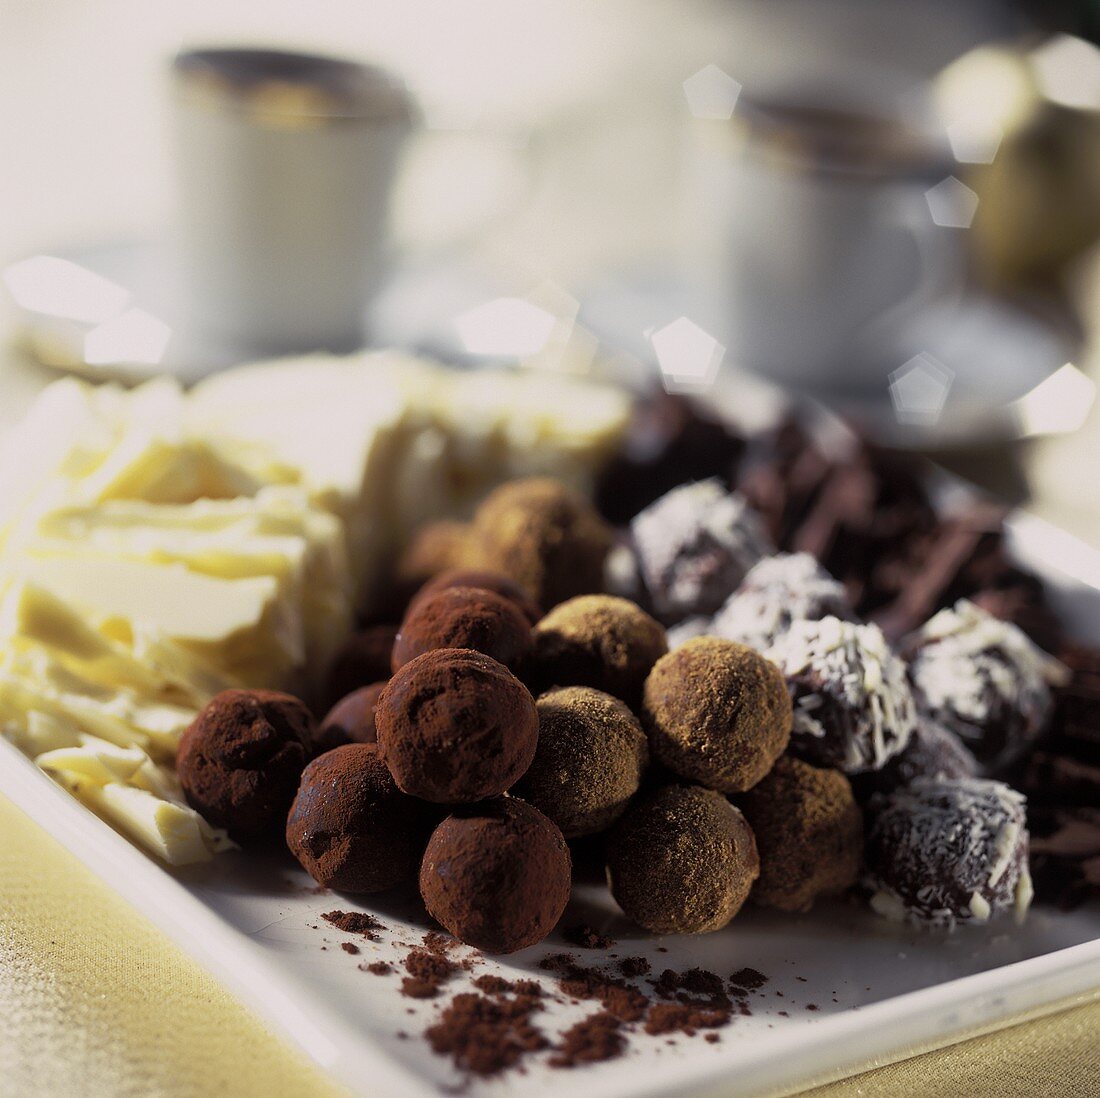 Assortment of Gourmet Chocolate Truffles